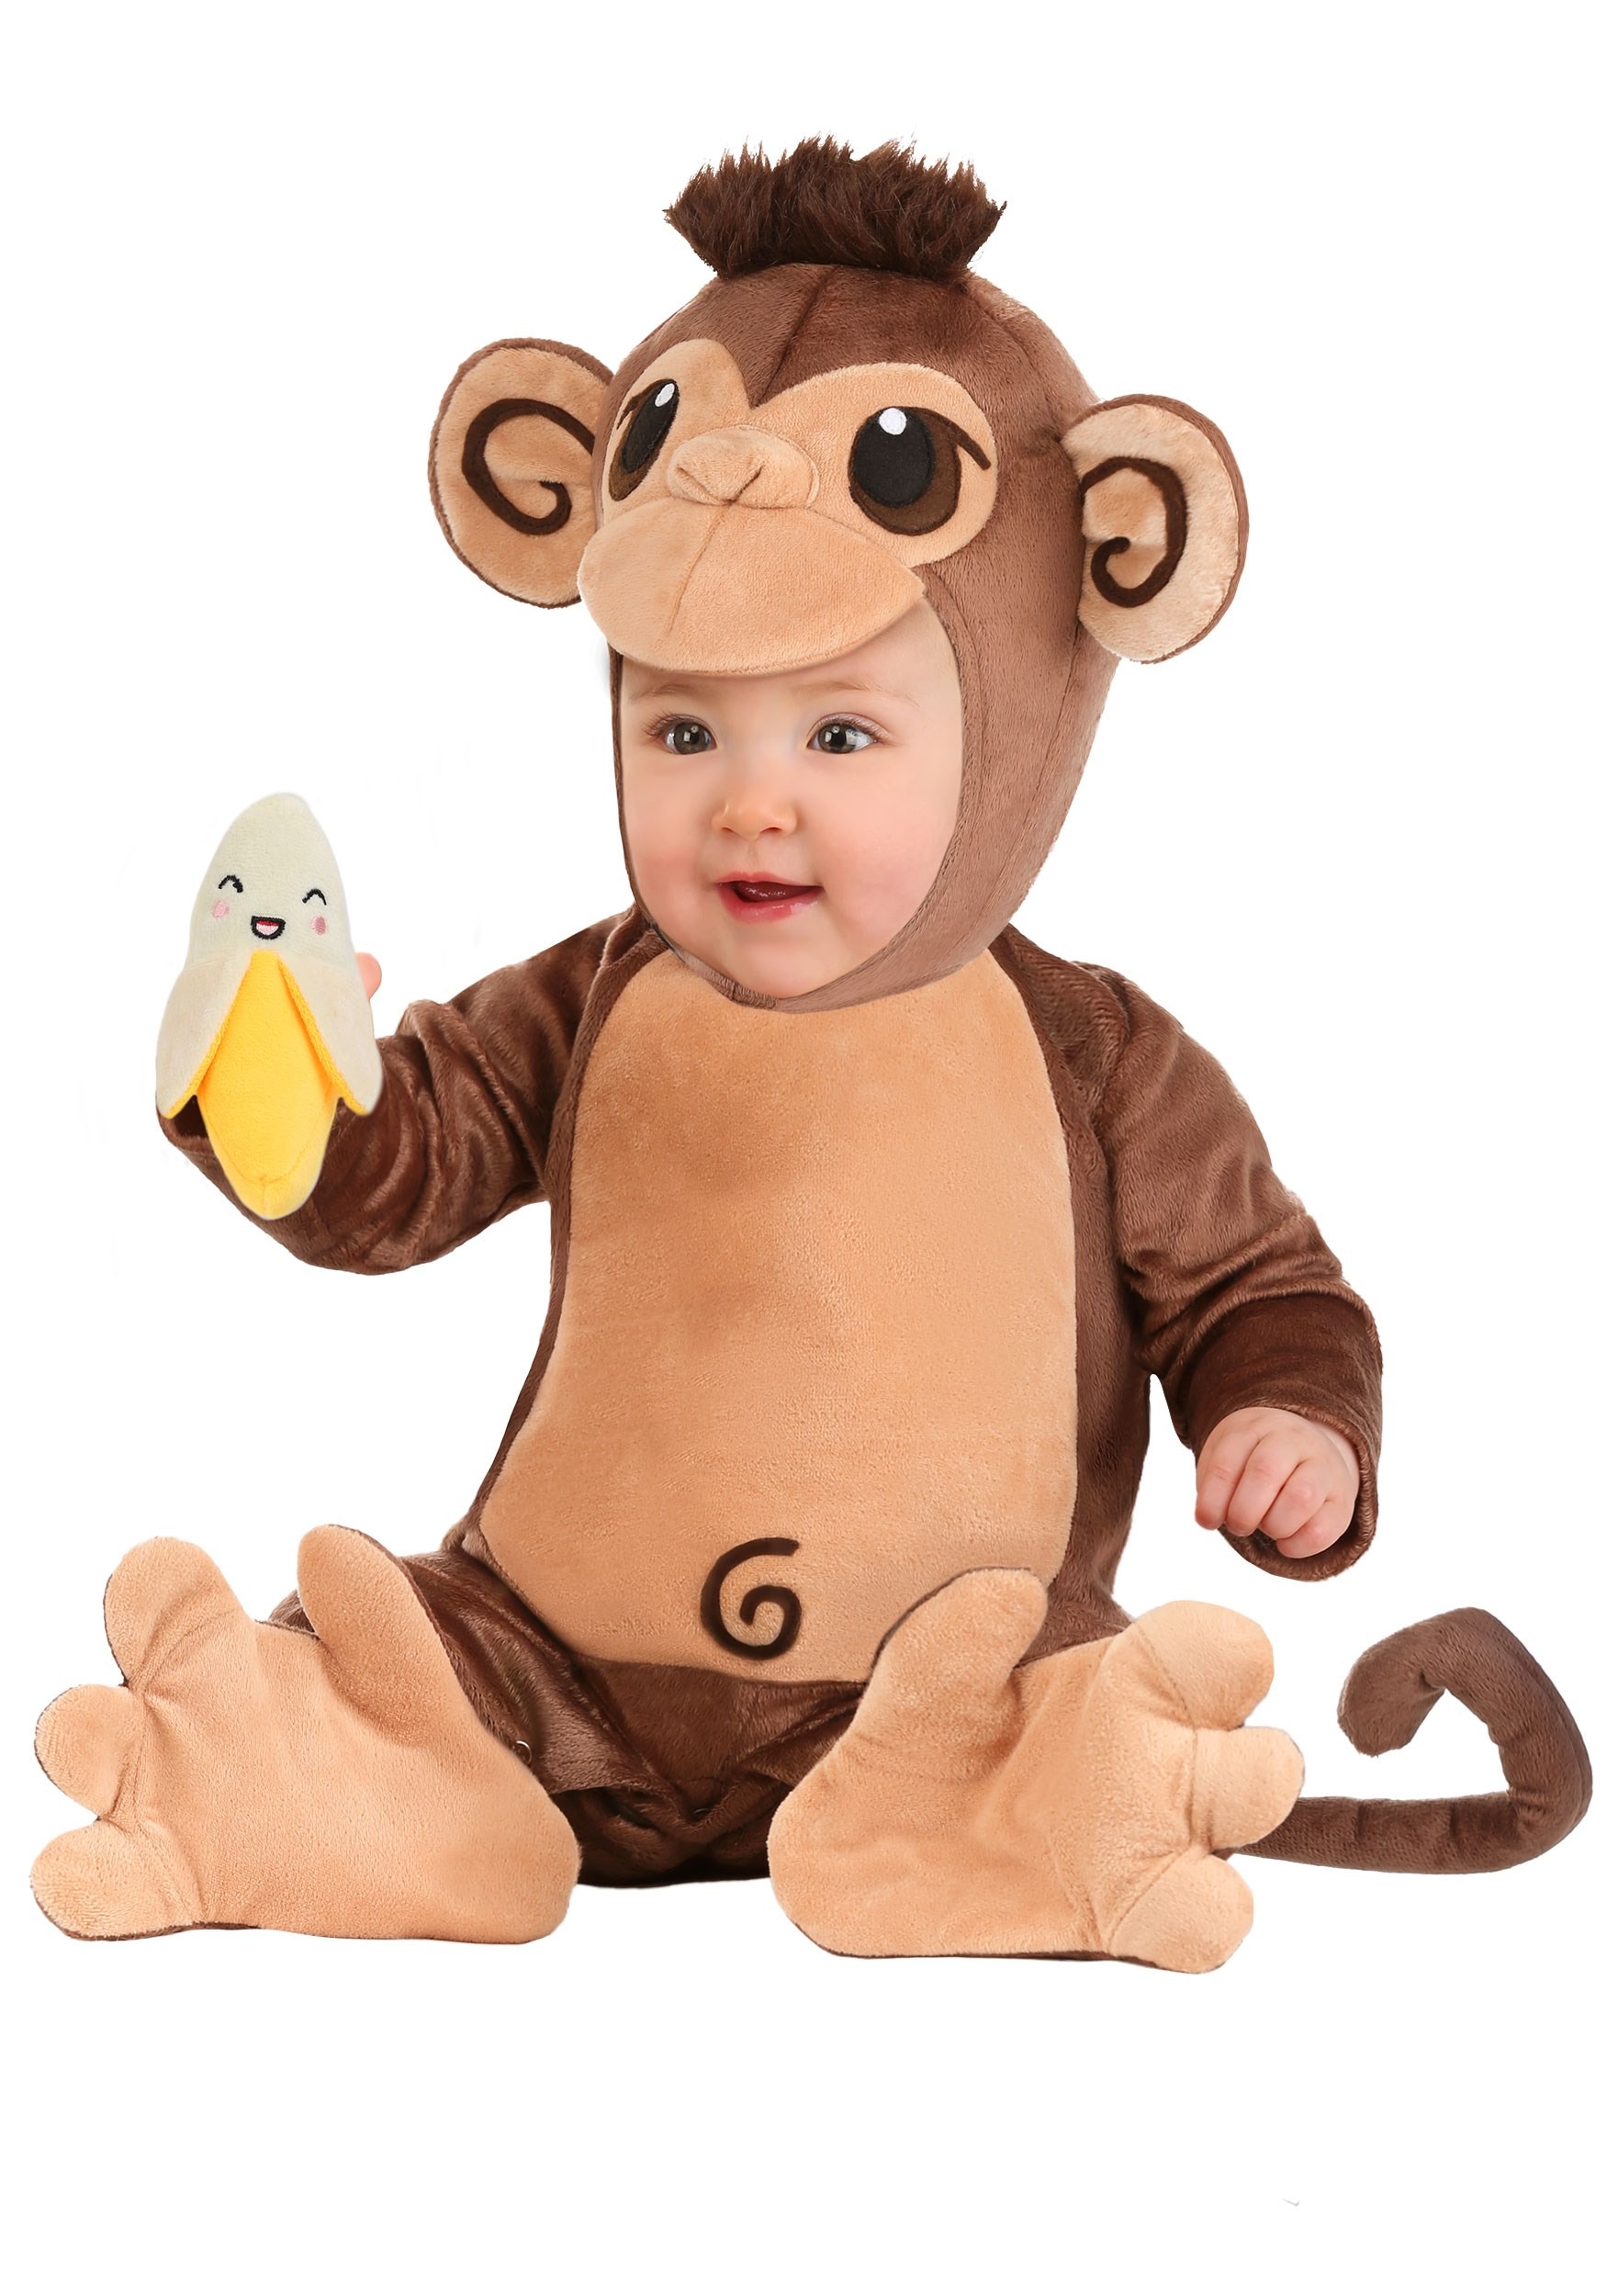 Photos - Fancy Dress Babies FUN Costumes Monkey Costume for Infants Brown/Beige FUN0735IN 